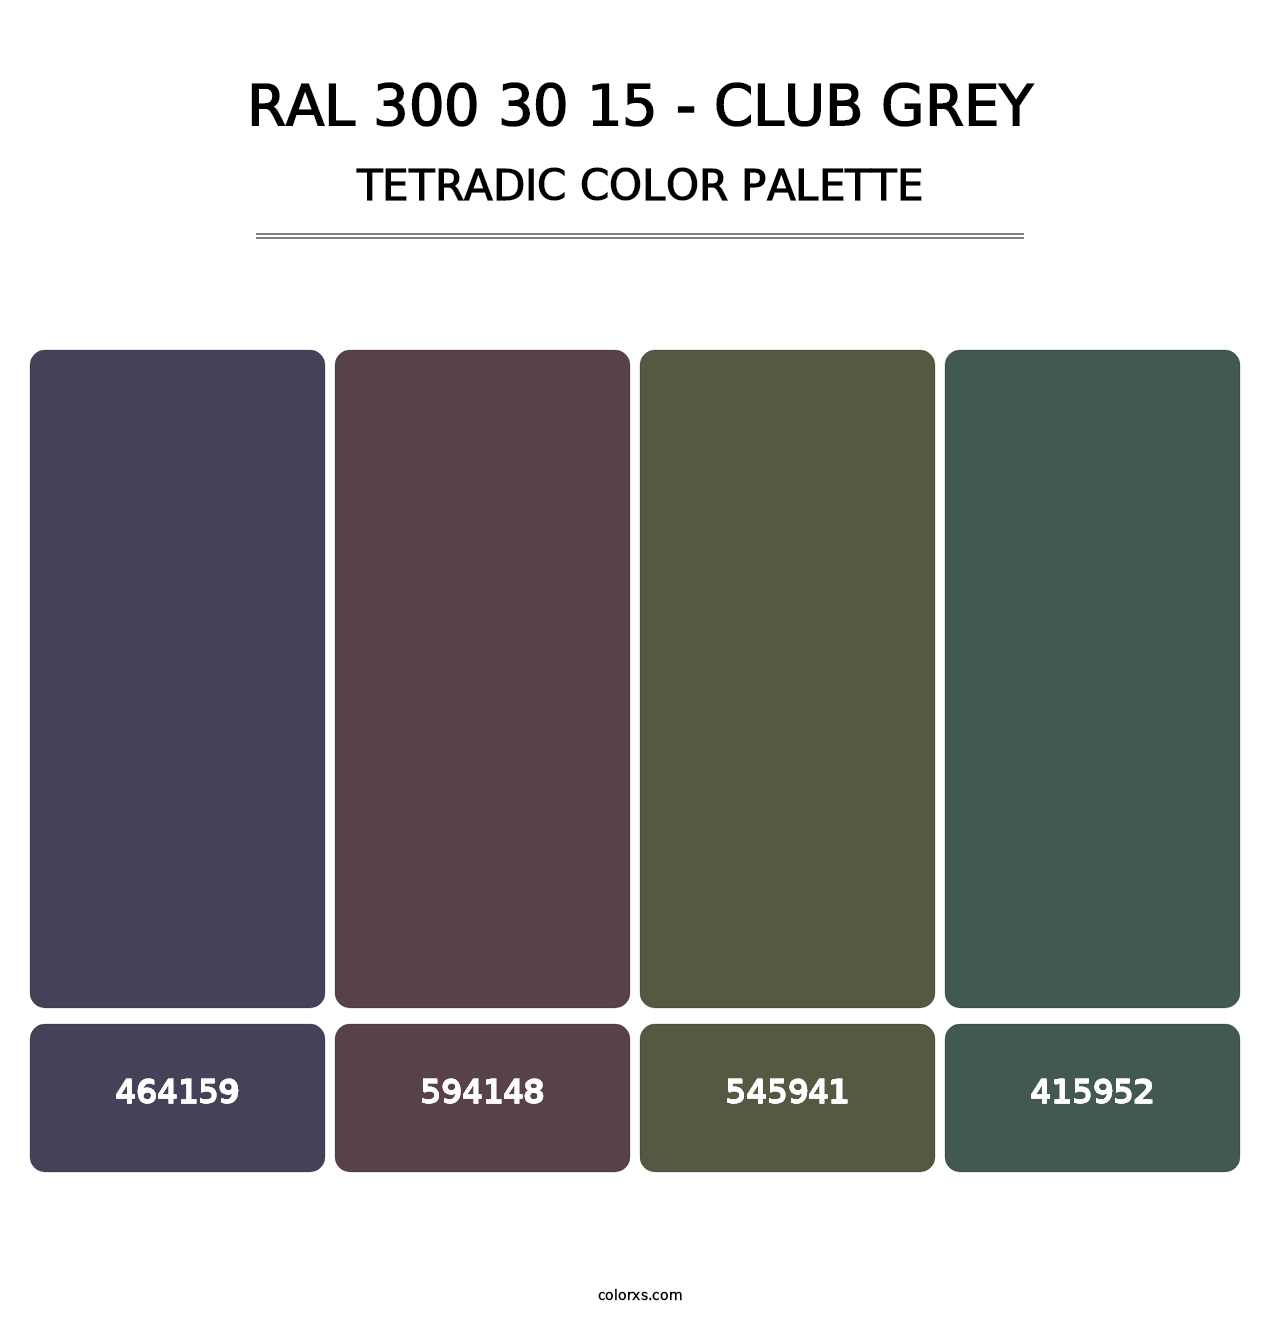 RAL 300 30 15 - Club Grey - Tetradic Color Palette